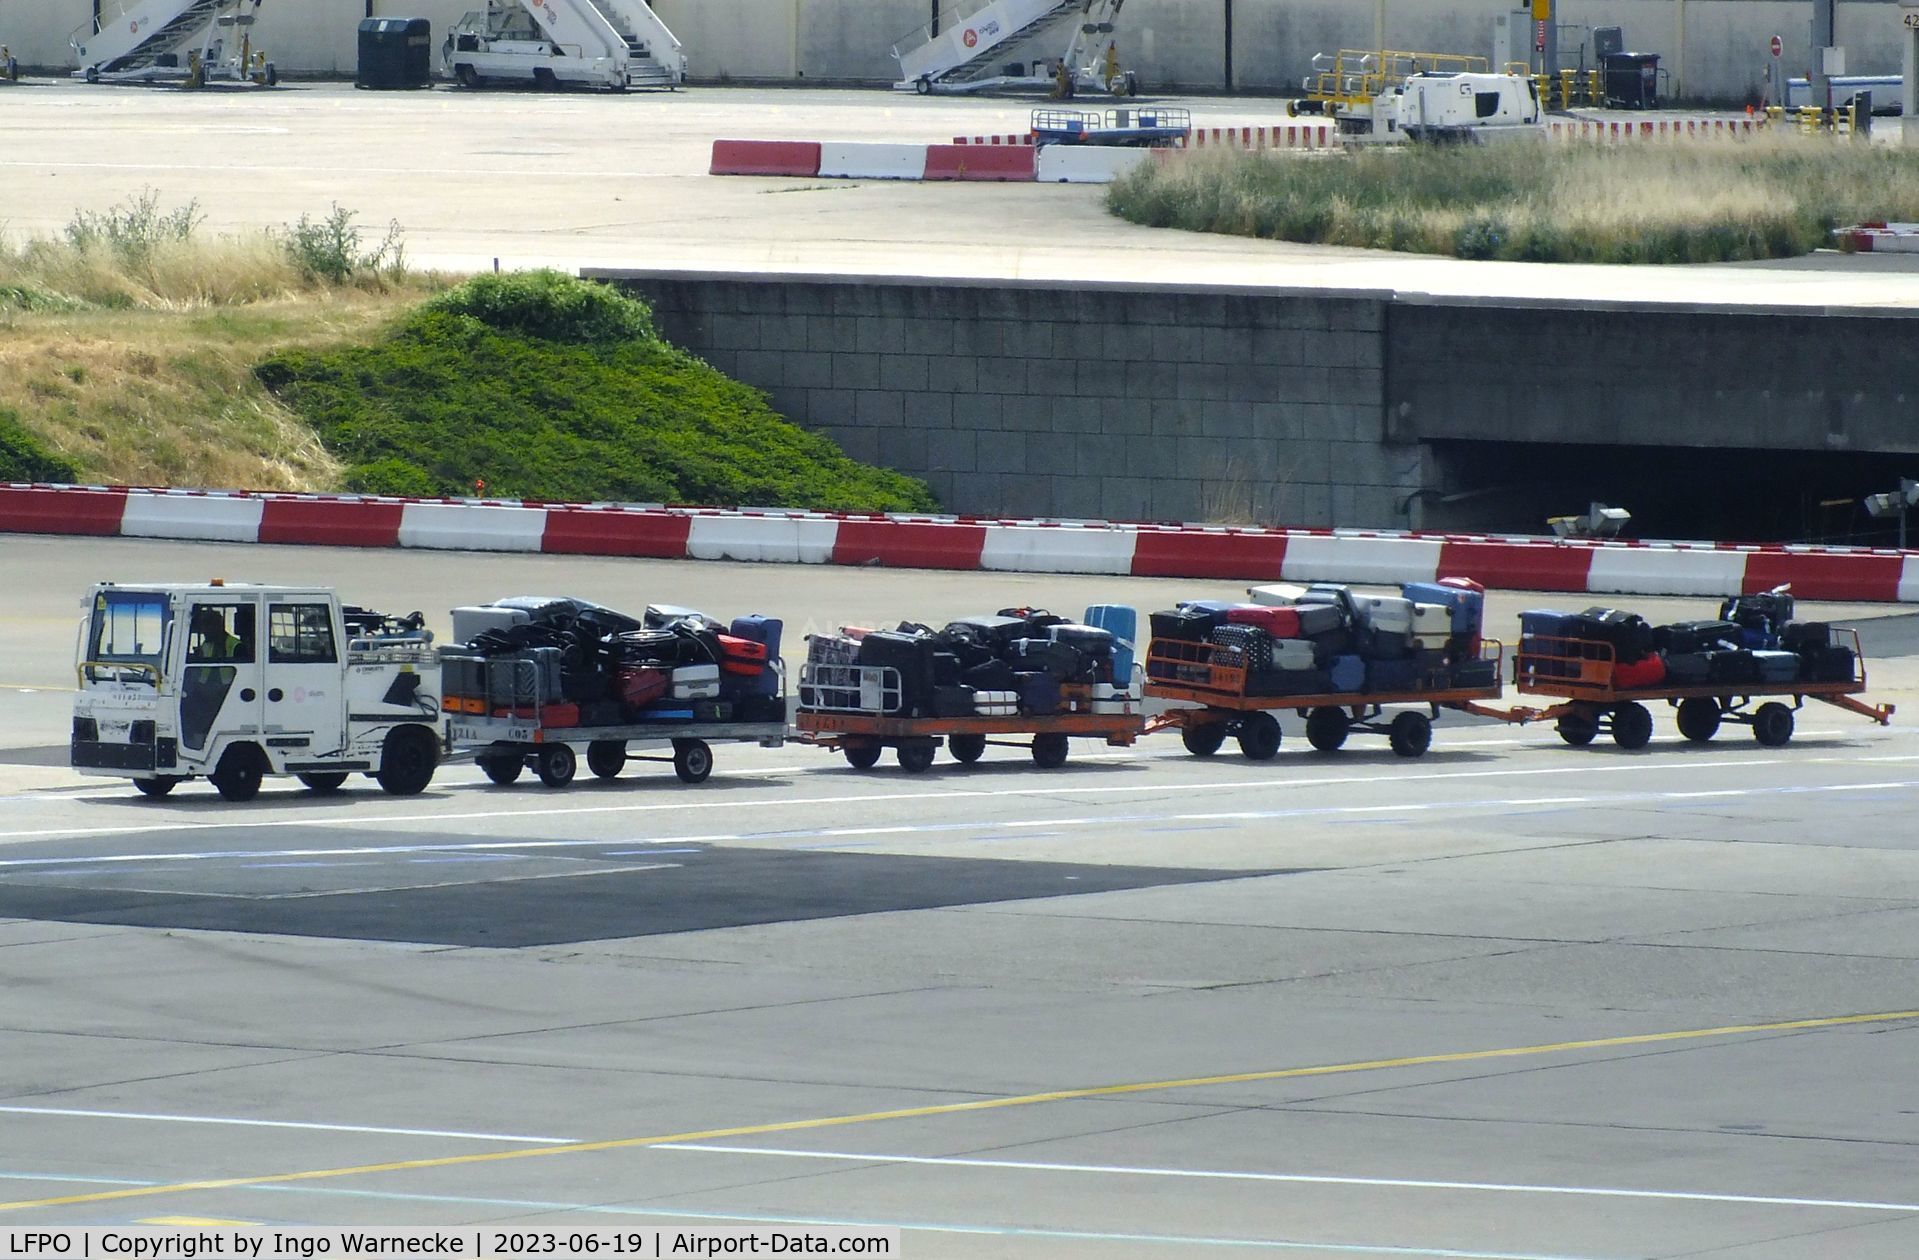 Paris Orly Airport, Orly (near Paris) France (LFPO) - incoming baggage train at Paris/Orly airport